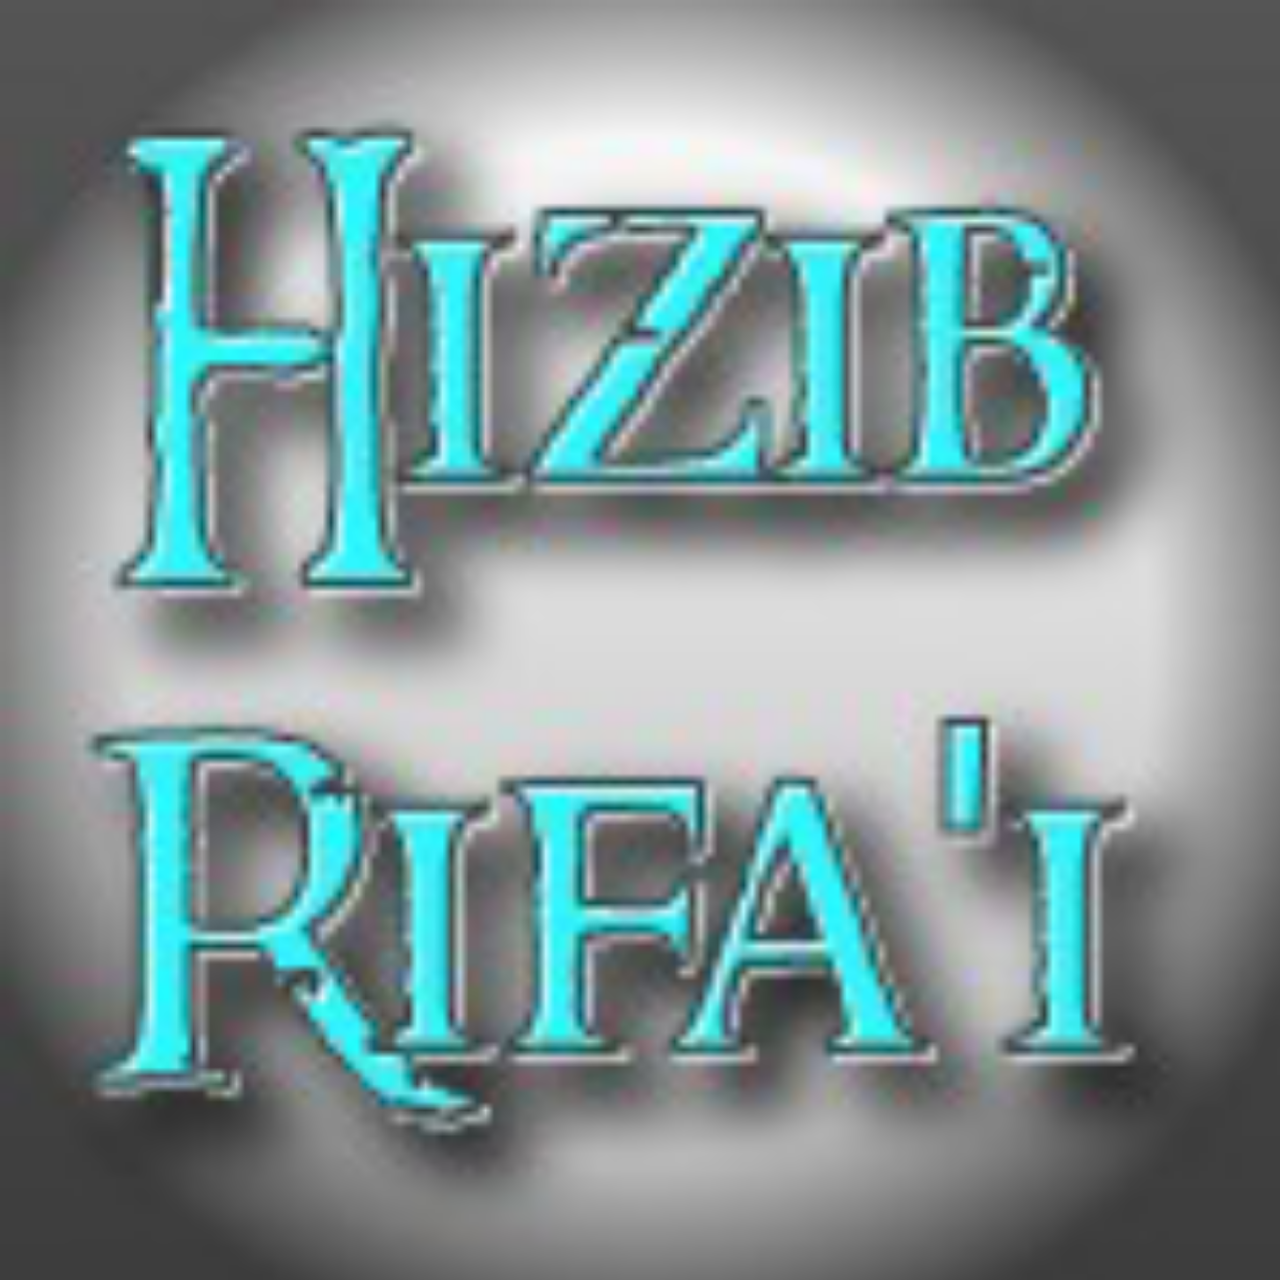 Hizib Rifa'i juga sering disebut dengan Isim Tunggal